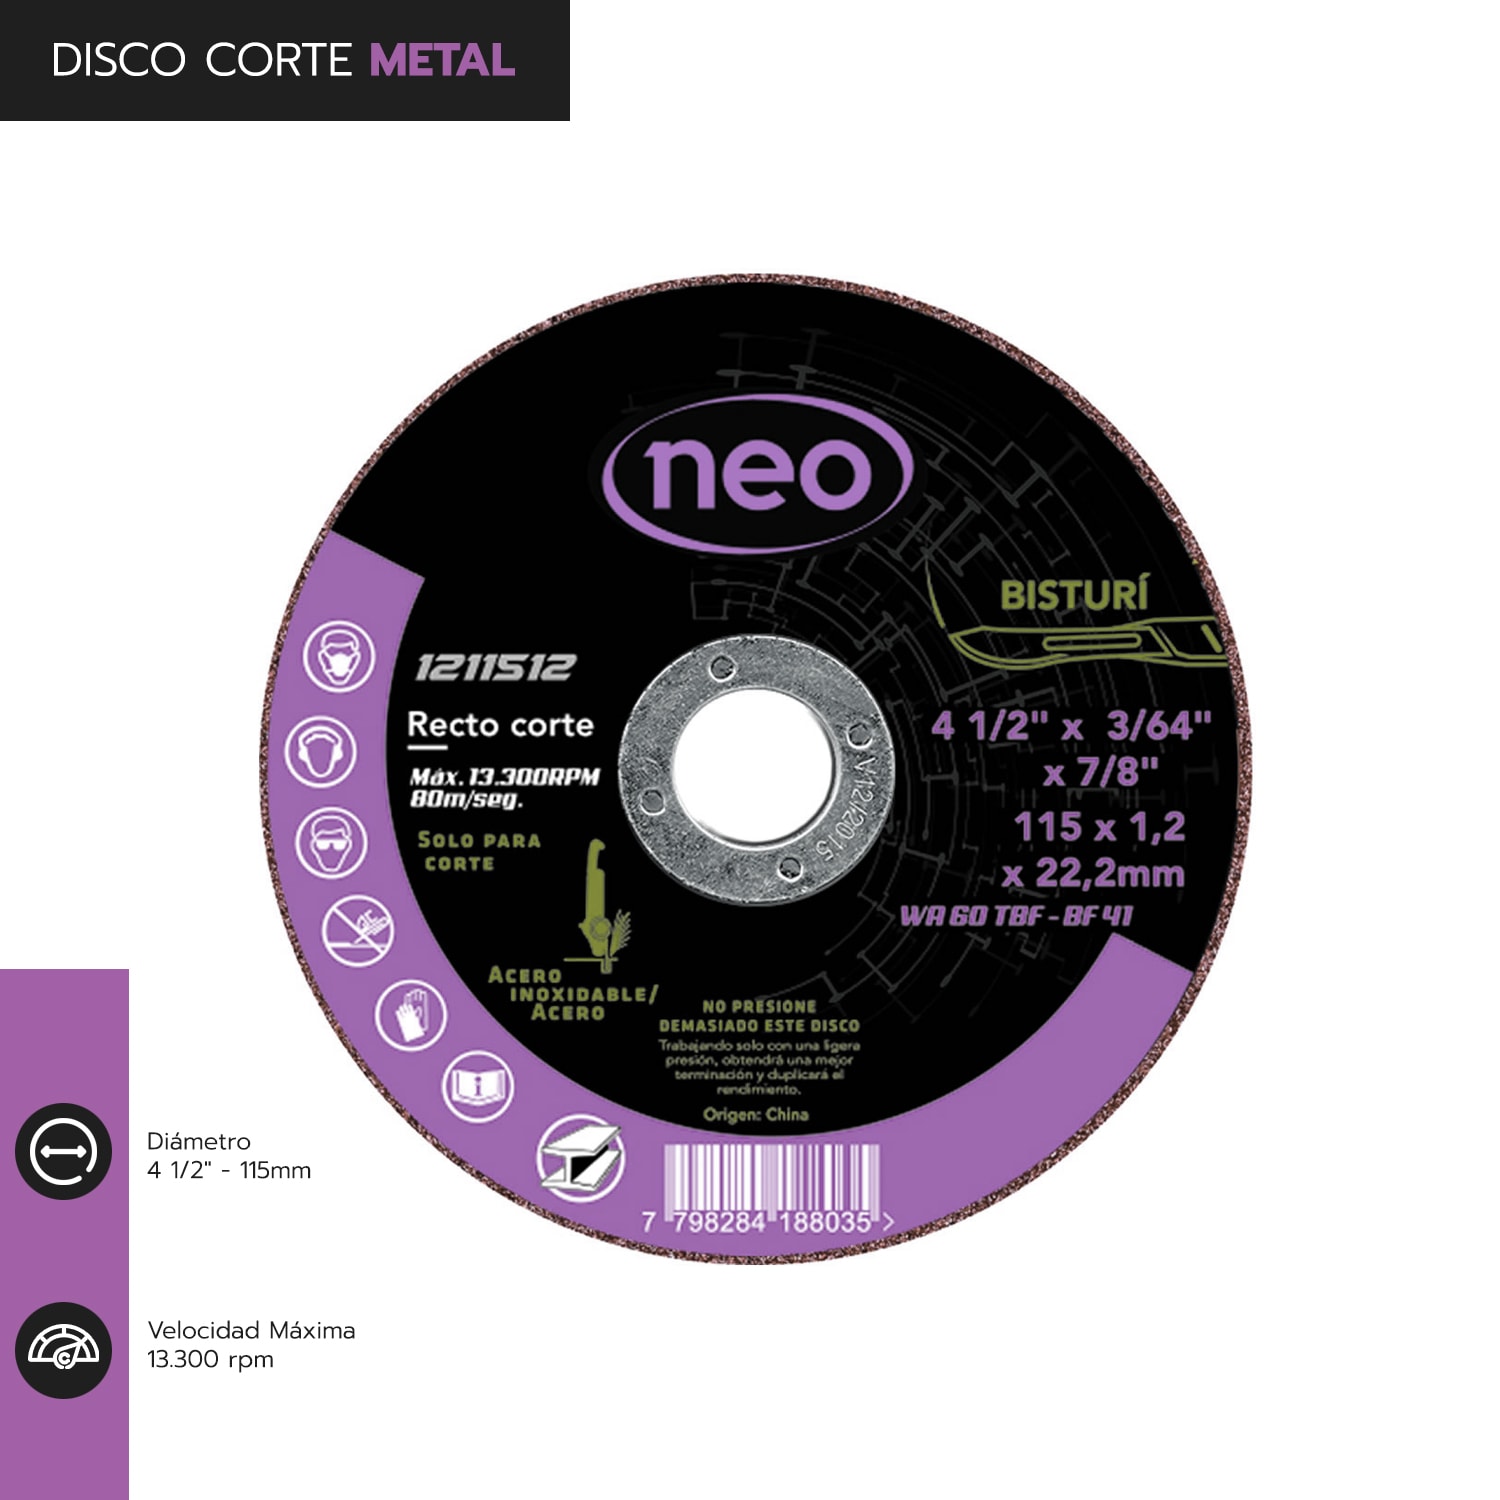 DISCO CORTE 4 1/2 x 1.2mm METAL INOX 1211512